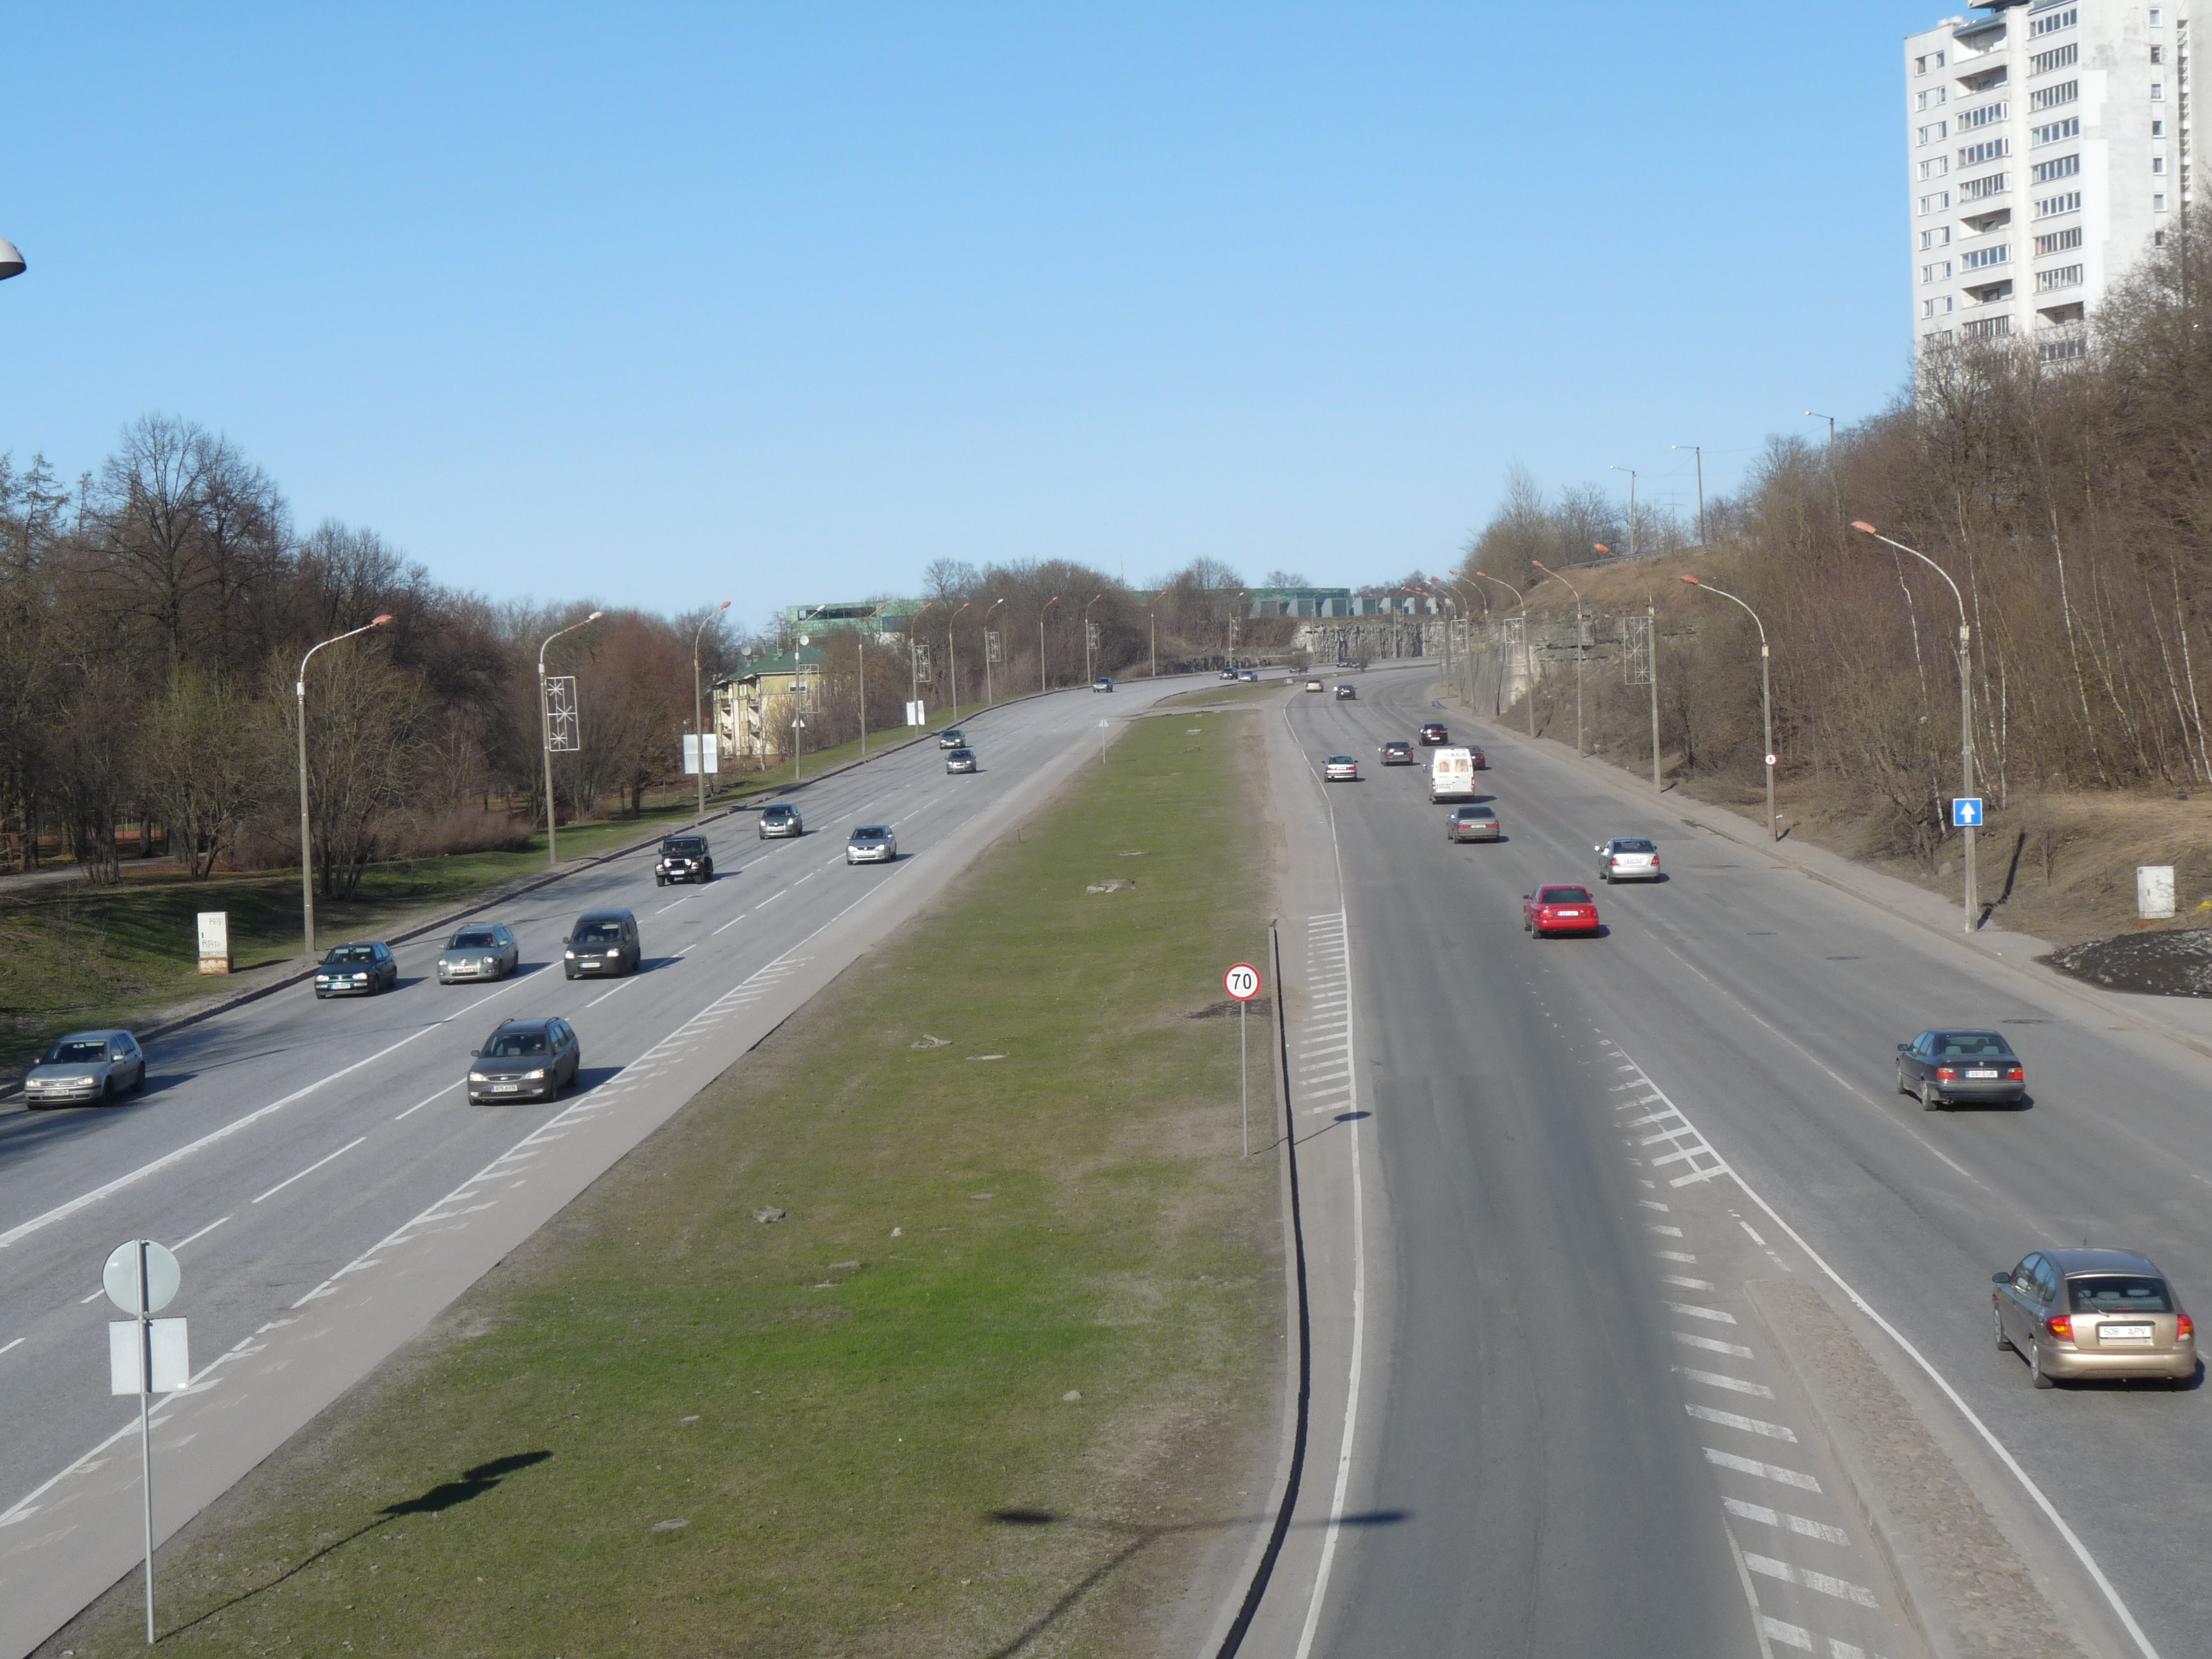 EU-EE-Tallinn-Laagna street - Begining of Laagna street